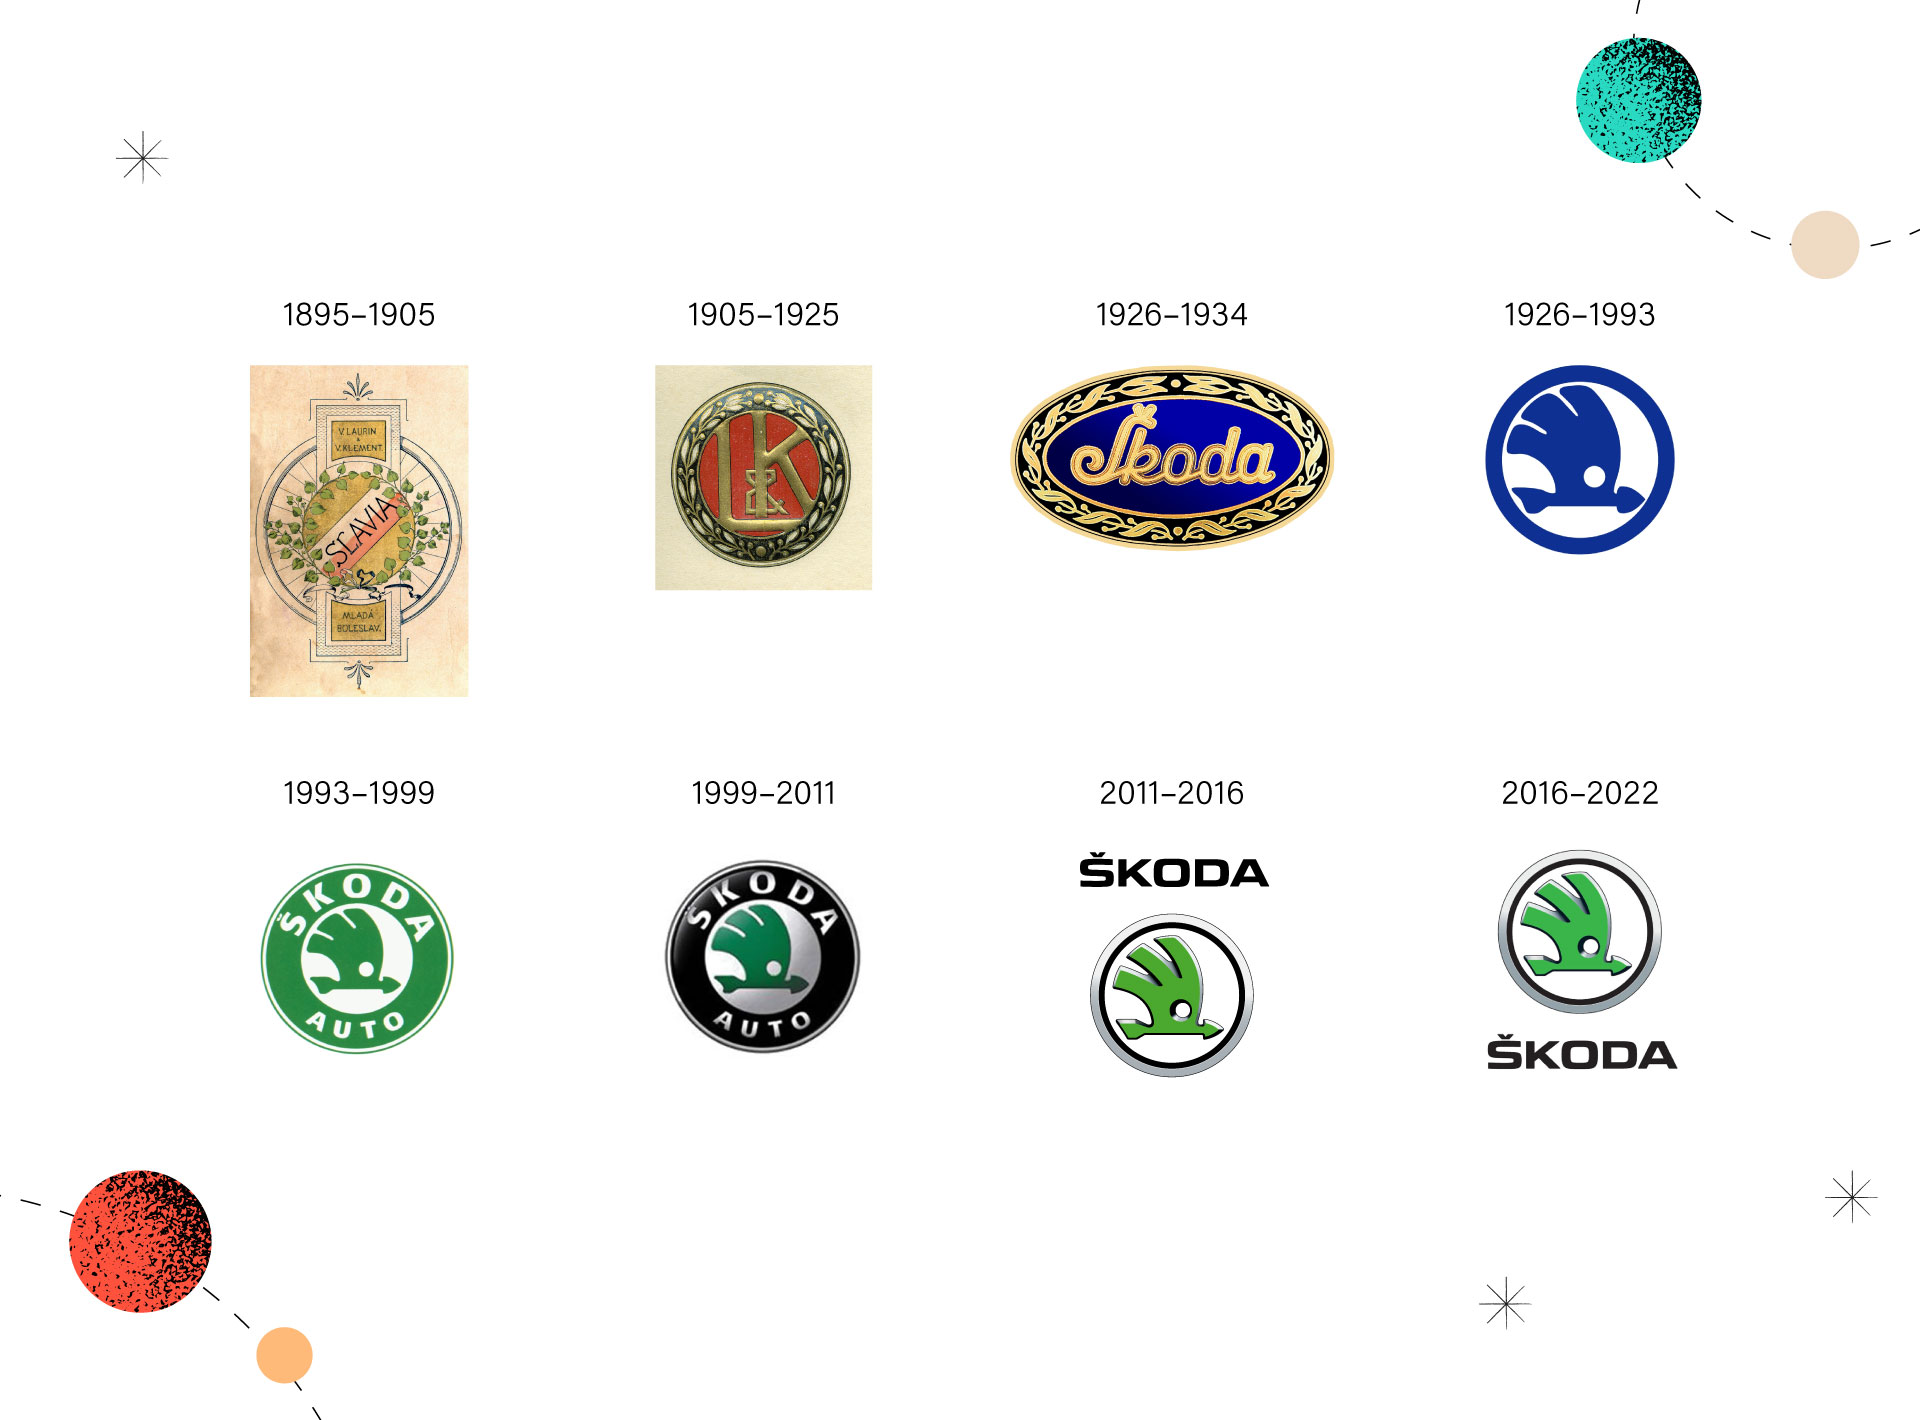 Evolution of the SKODA logo